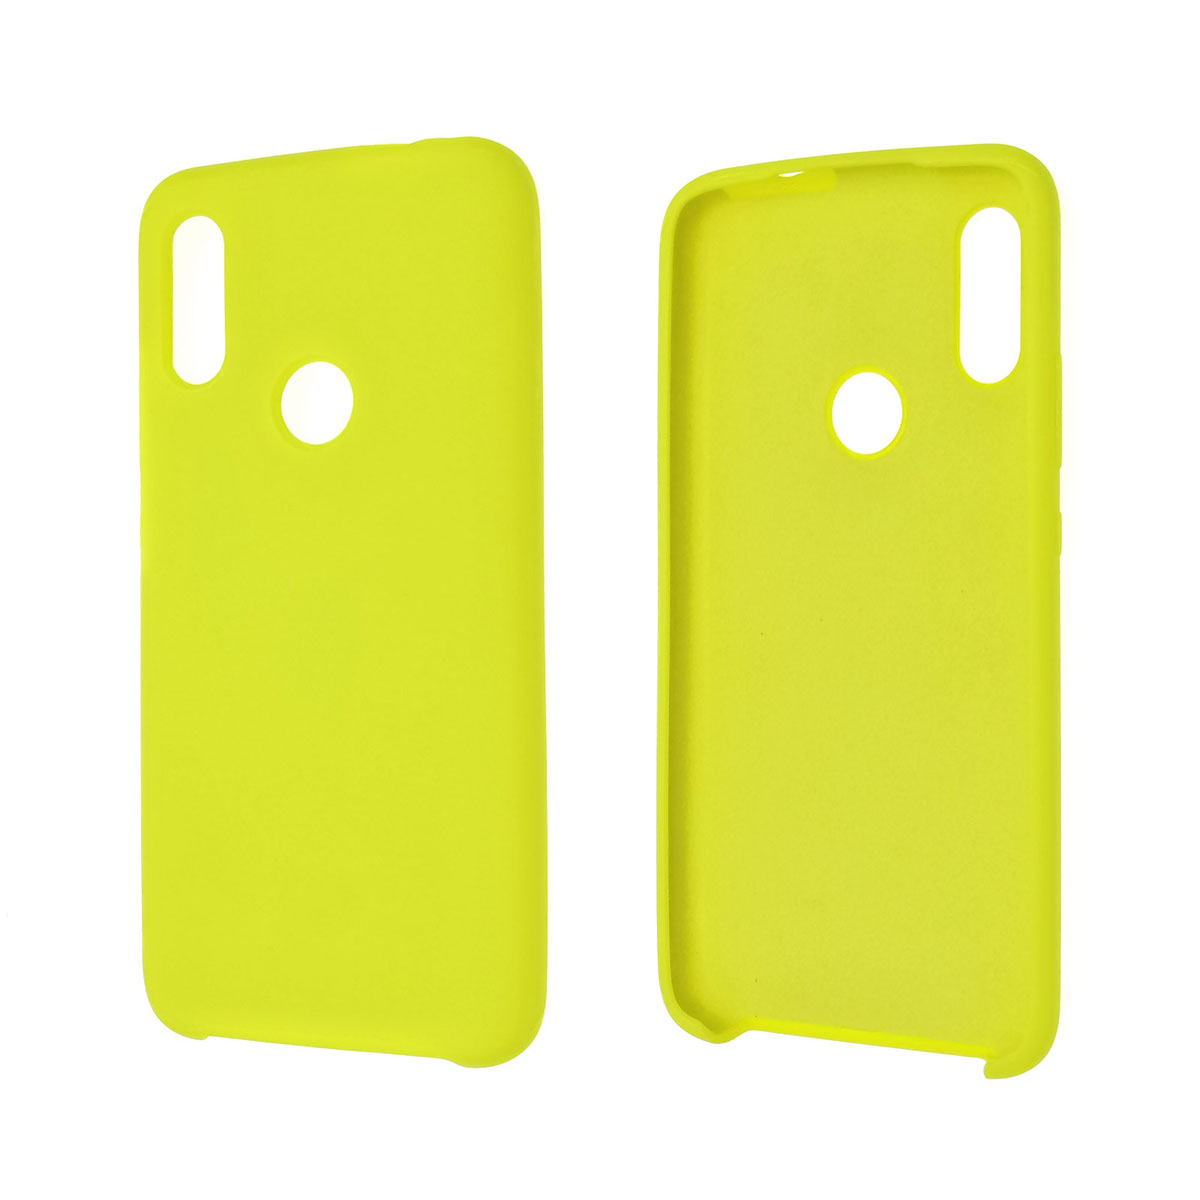 Чехол накладка Silicon Cover для XIAOMI Redmi 7, силикон, бархат, цвет желтый